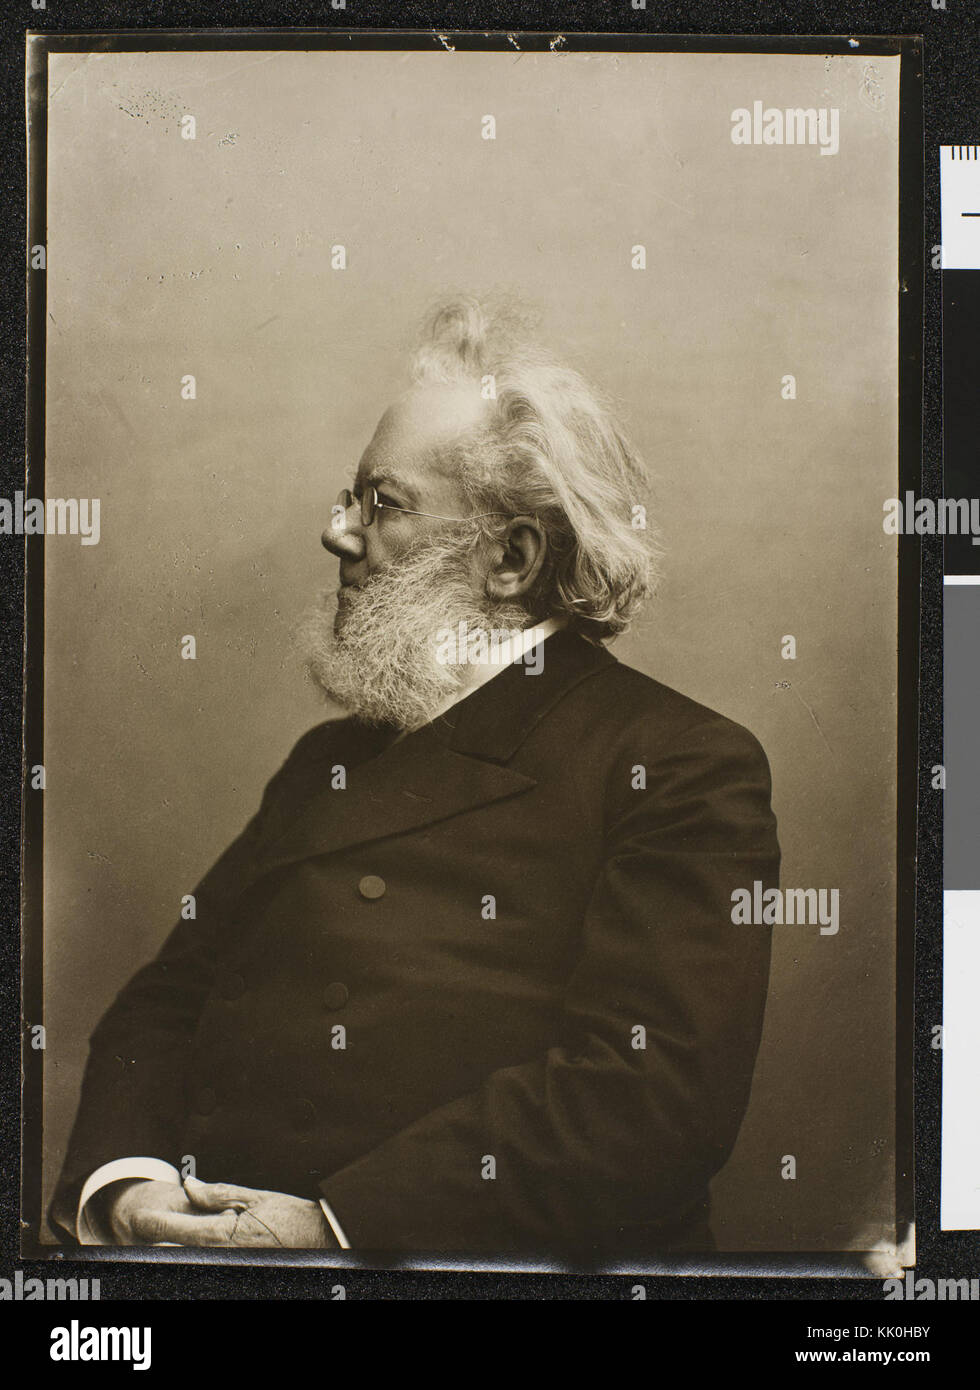 Portrett av Henrik Ibsen, Kristiania, 1898 Keine nb DigiFoto-Maker 20160226 00083 bldsa ib 1a 2004 Stockfoto